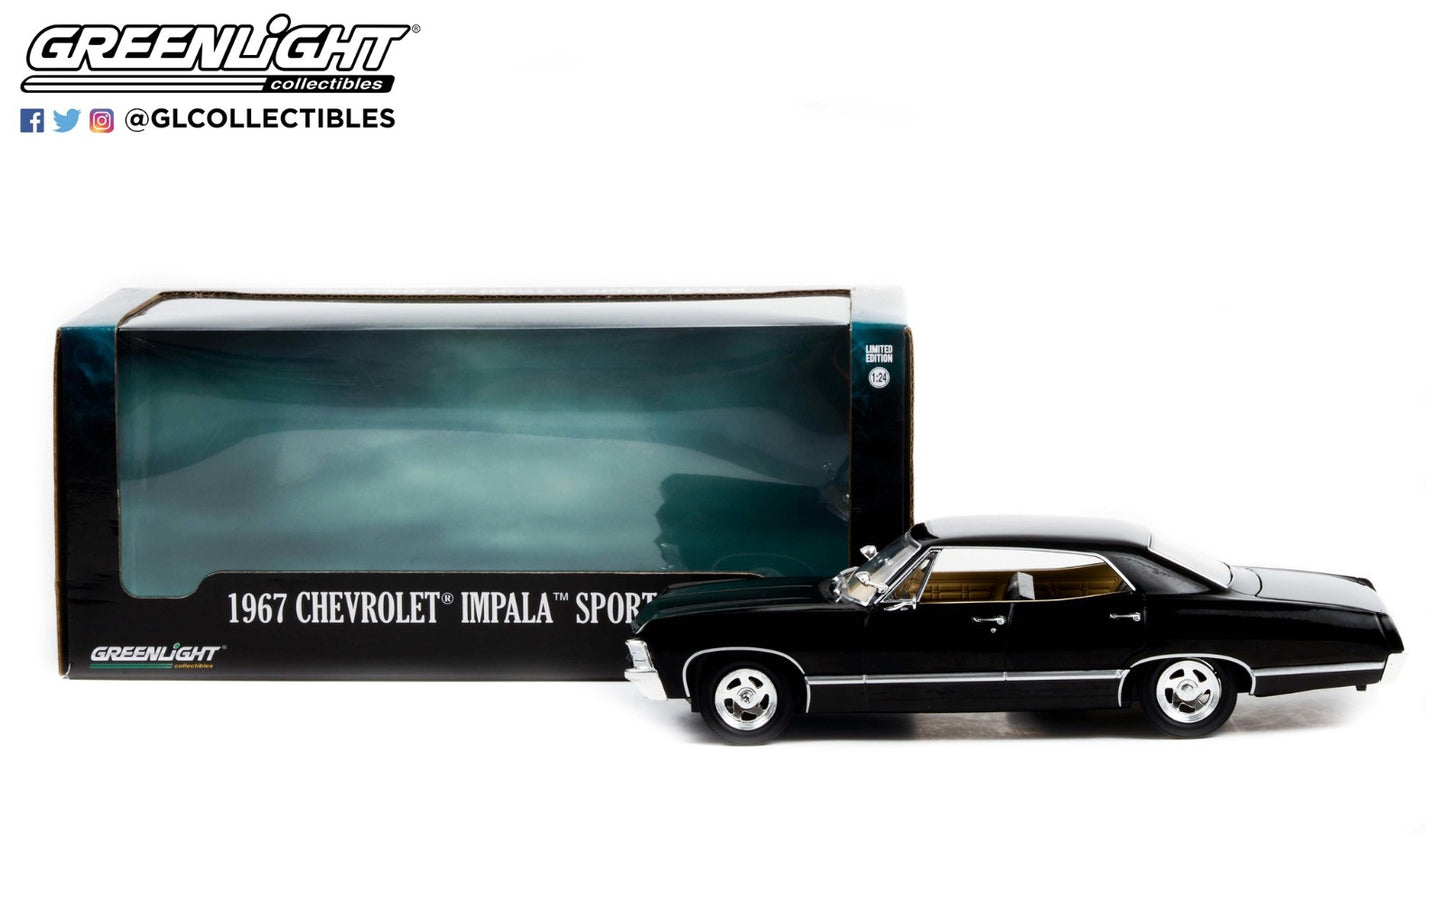 GreenLight 1:24 1967 Chevrolet Impala Sport Sedan - Tuxedo Black 84035